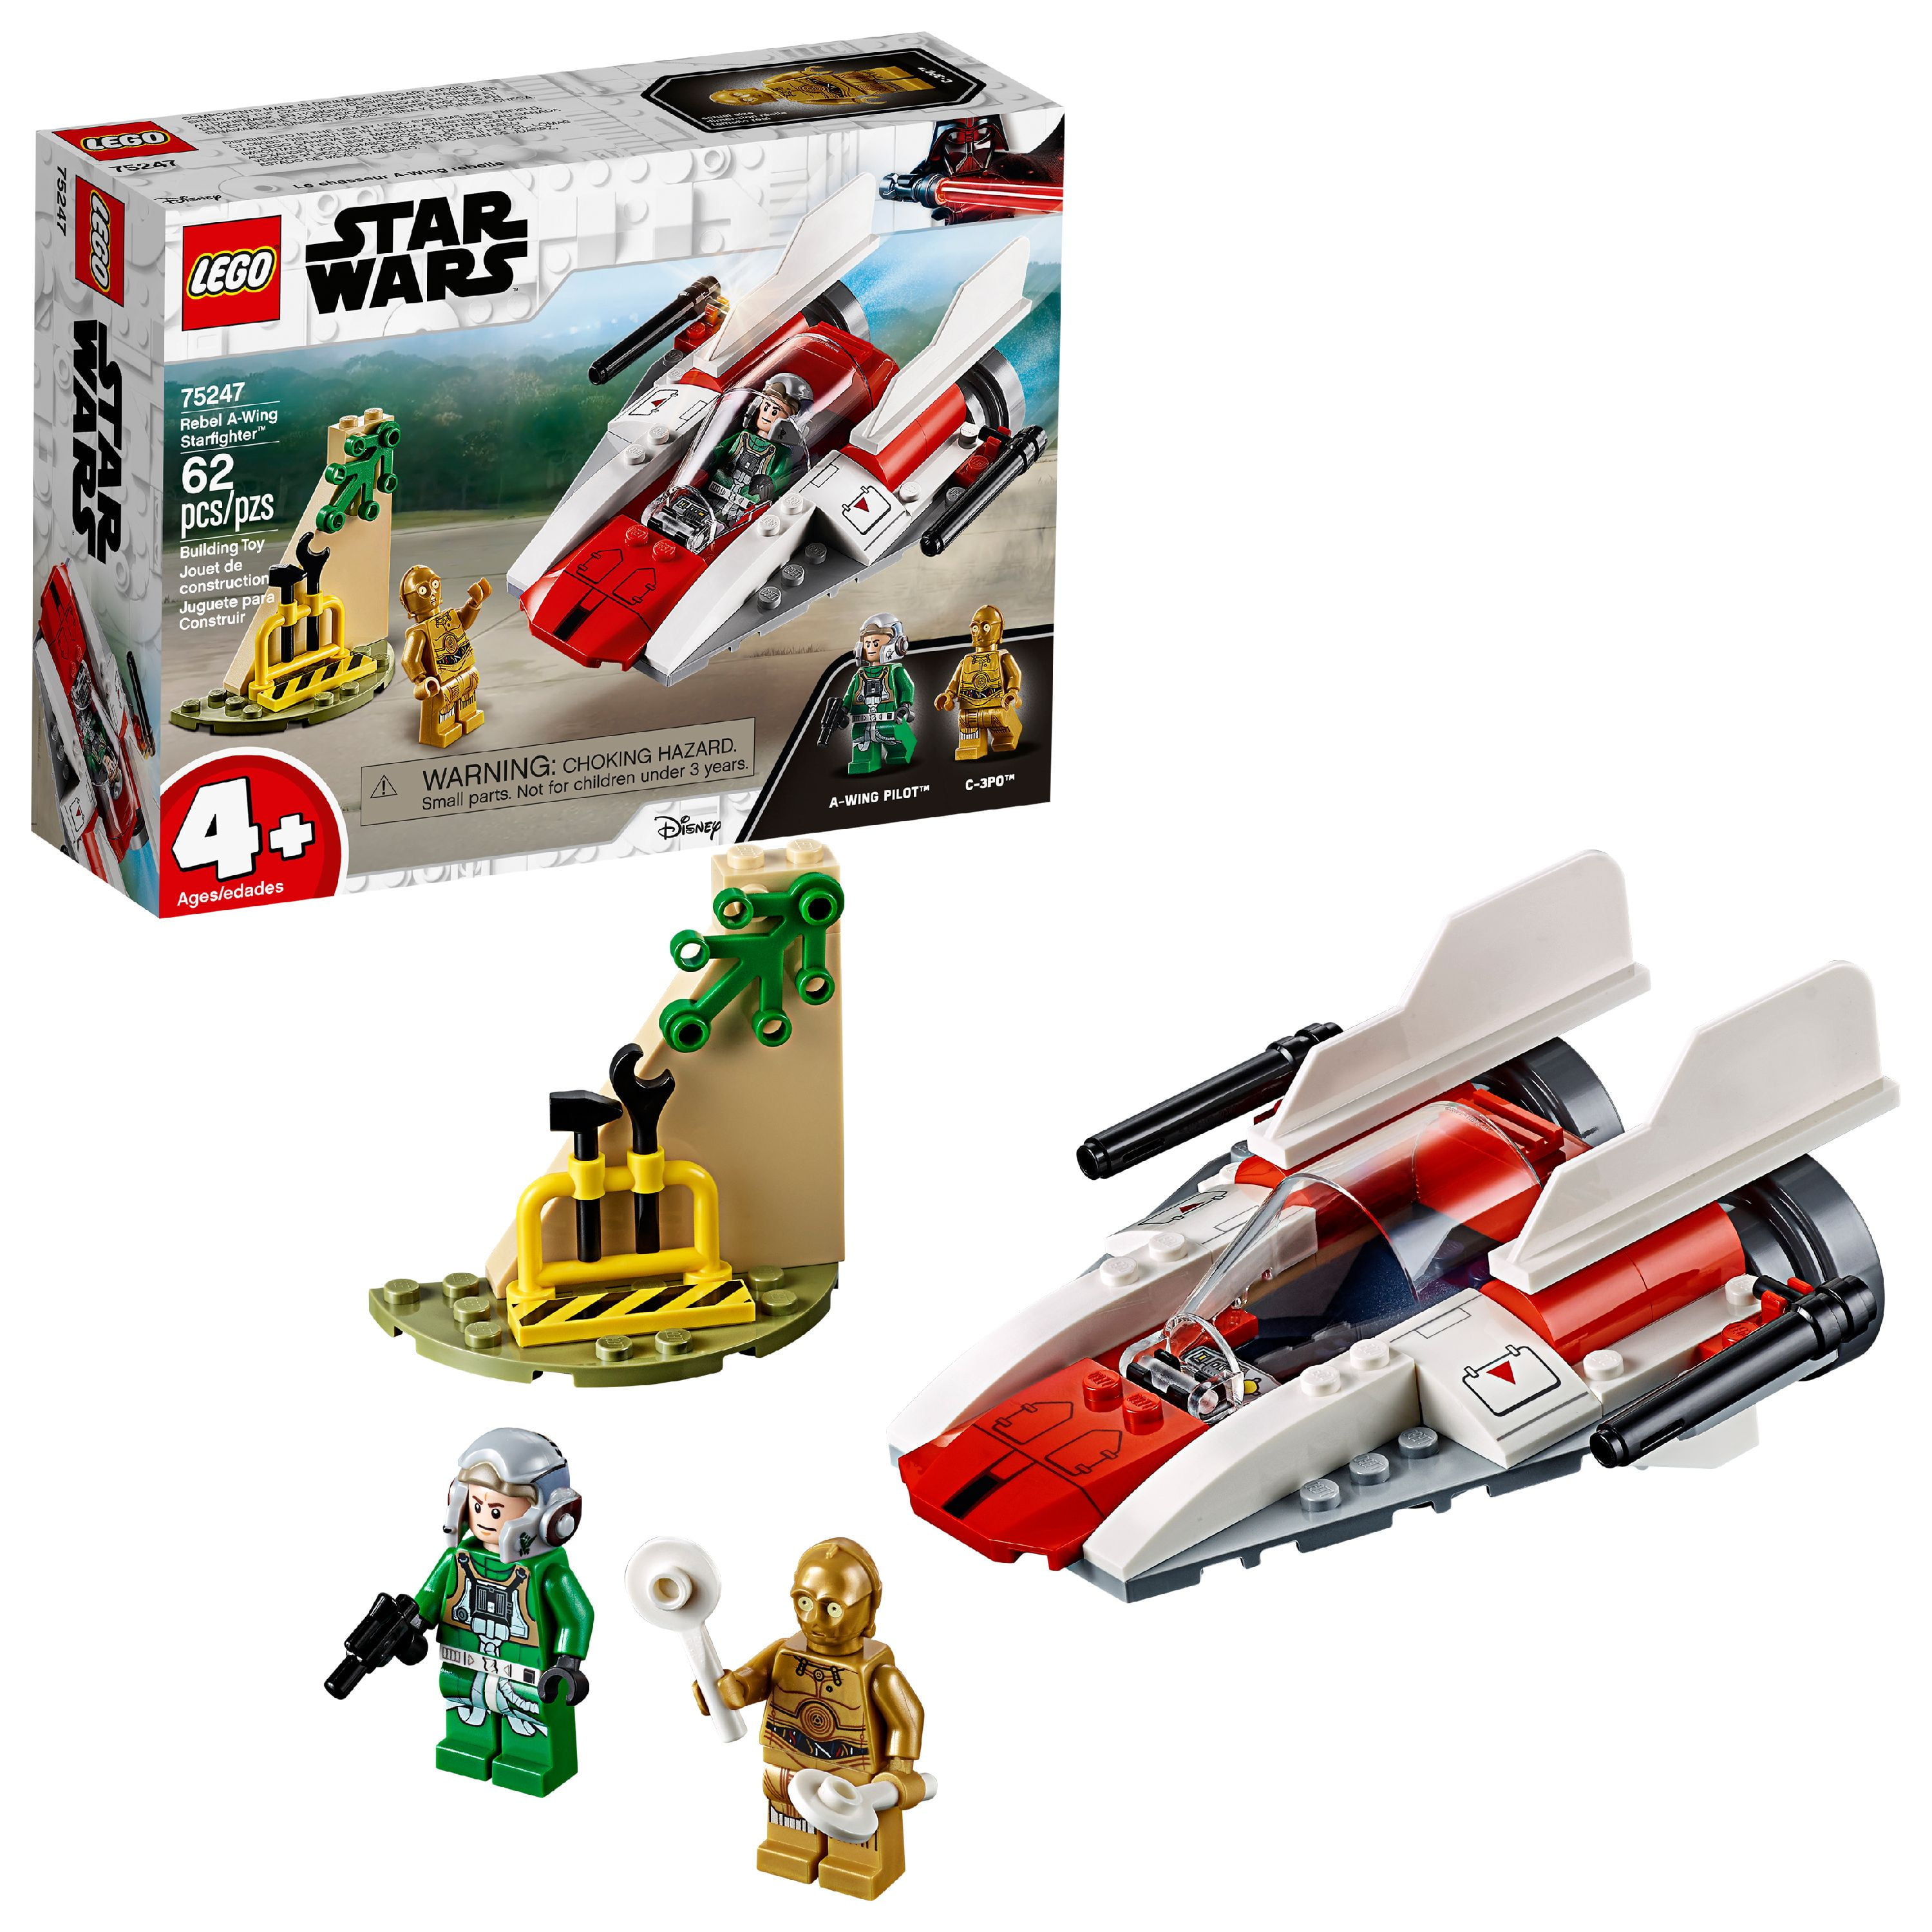 Version 7 from set 75225 Lego Star Wars Elite Praetorian Guard minifigure 